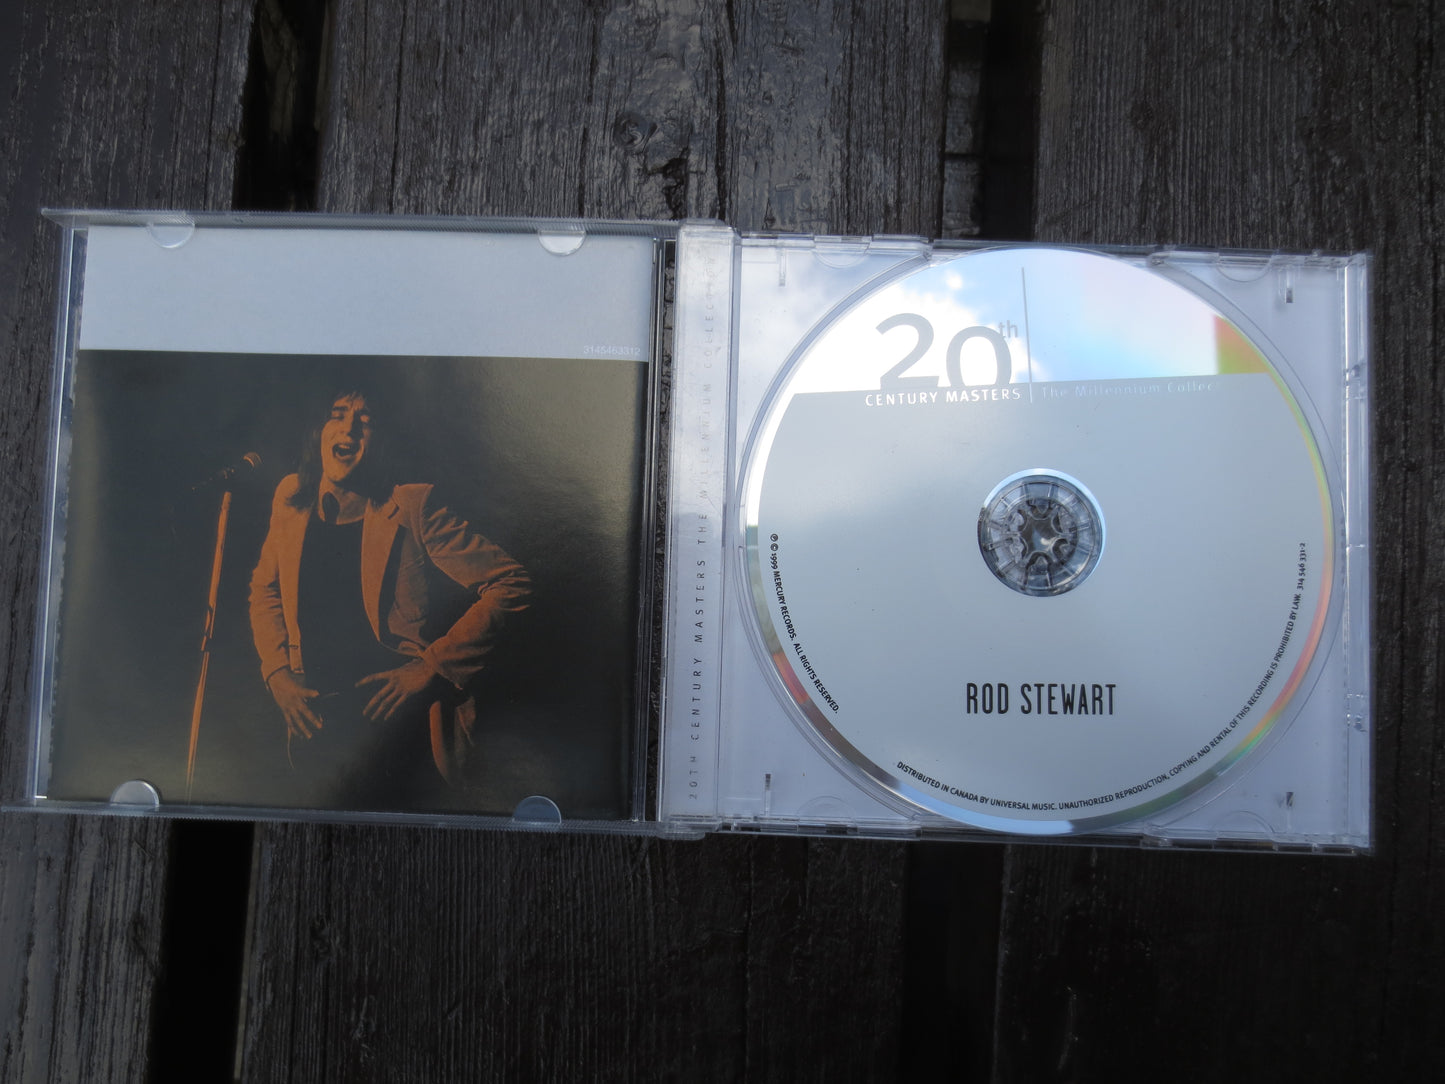 ROD STEWART, BEST of Cd, Rod Stewart Cd, Rod Stewart Lp, Rock Album, Rod Stewart Music, Classic Rock Cd, 1999 Compact Disc